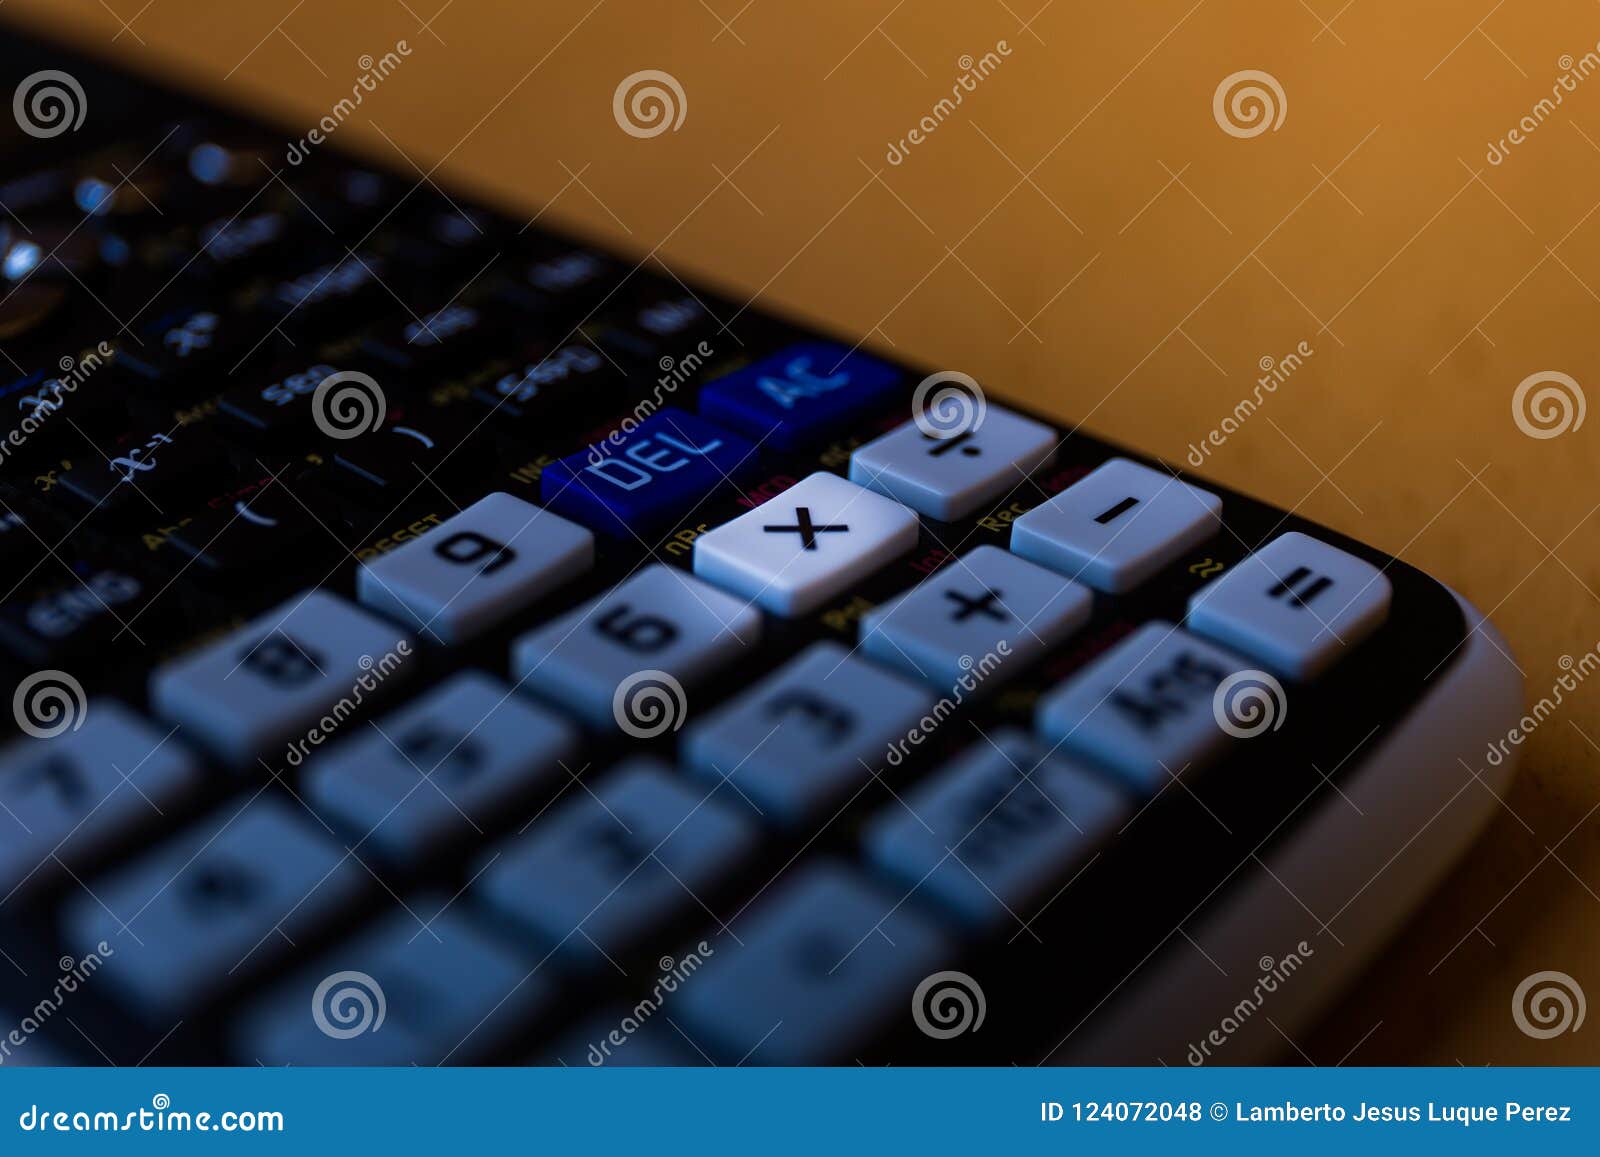 Multiplication Key Of A Scientific Calculator Keyboard Stock Photo